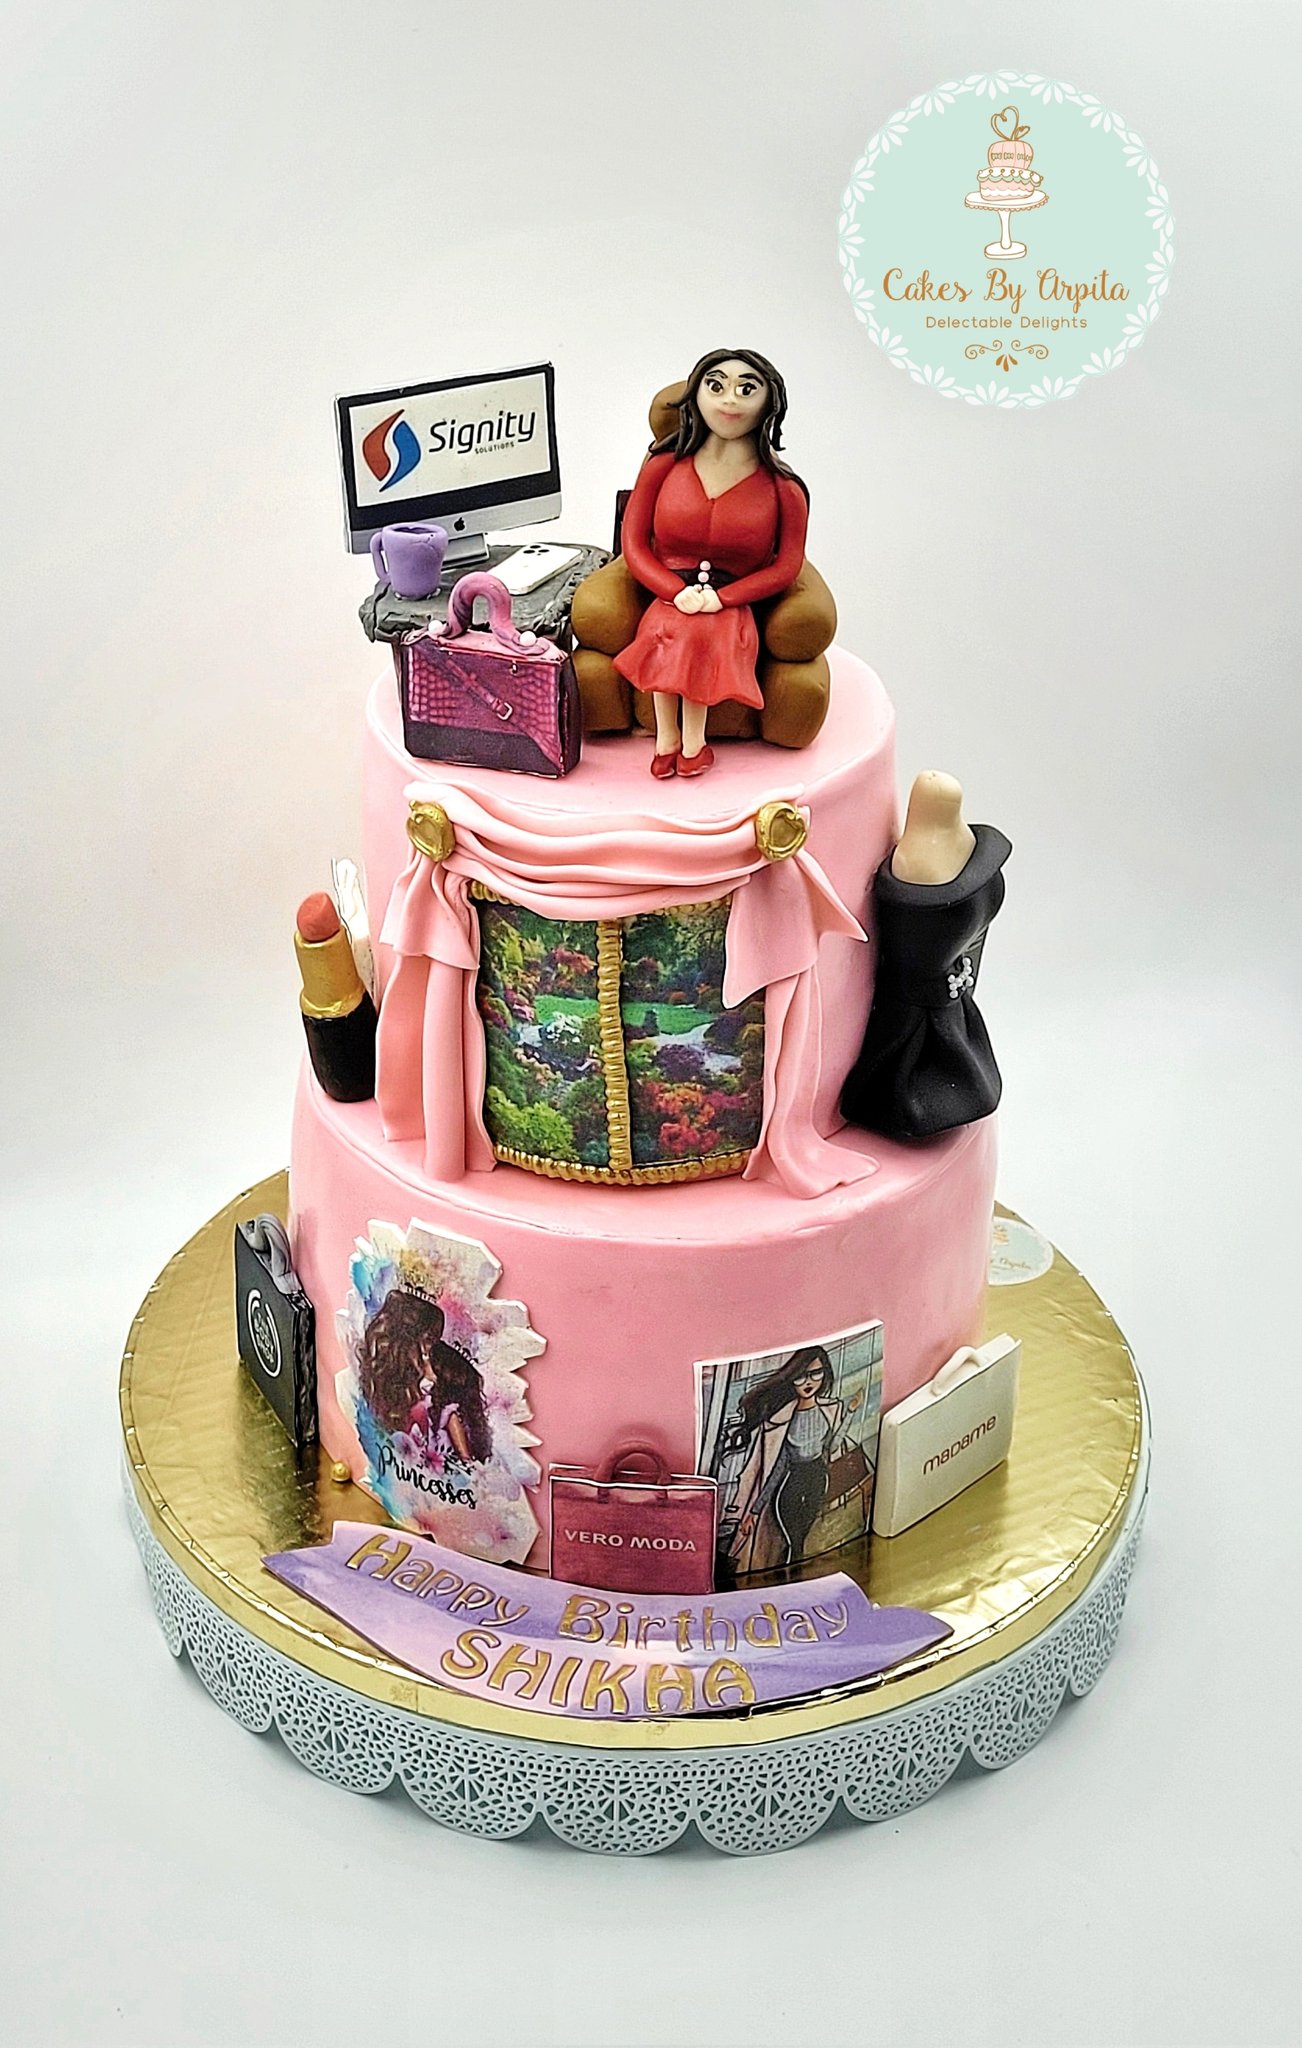 CakesByArpita on Twitter: Birthday Cake commissioned for Lady" who is an excellent Multitasker as well✨️ #birthdaycake #egglesscake #customisedcake #ladybosscake #bosslady #cakeforsuperwoman #cakes / Twitter